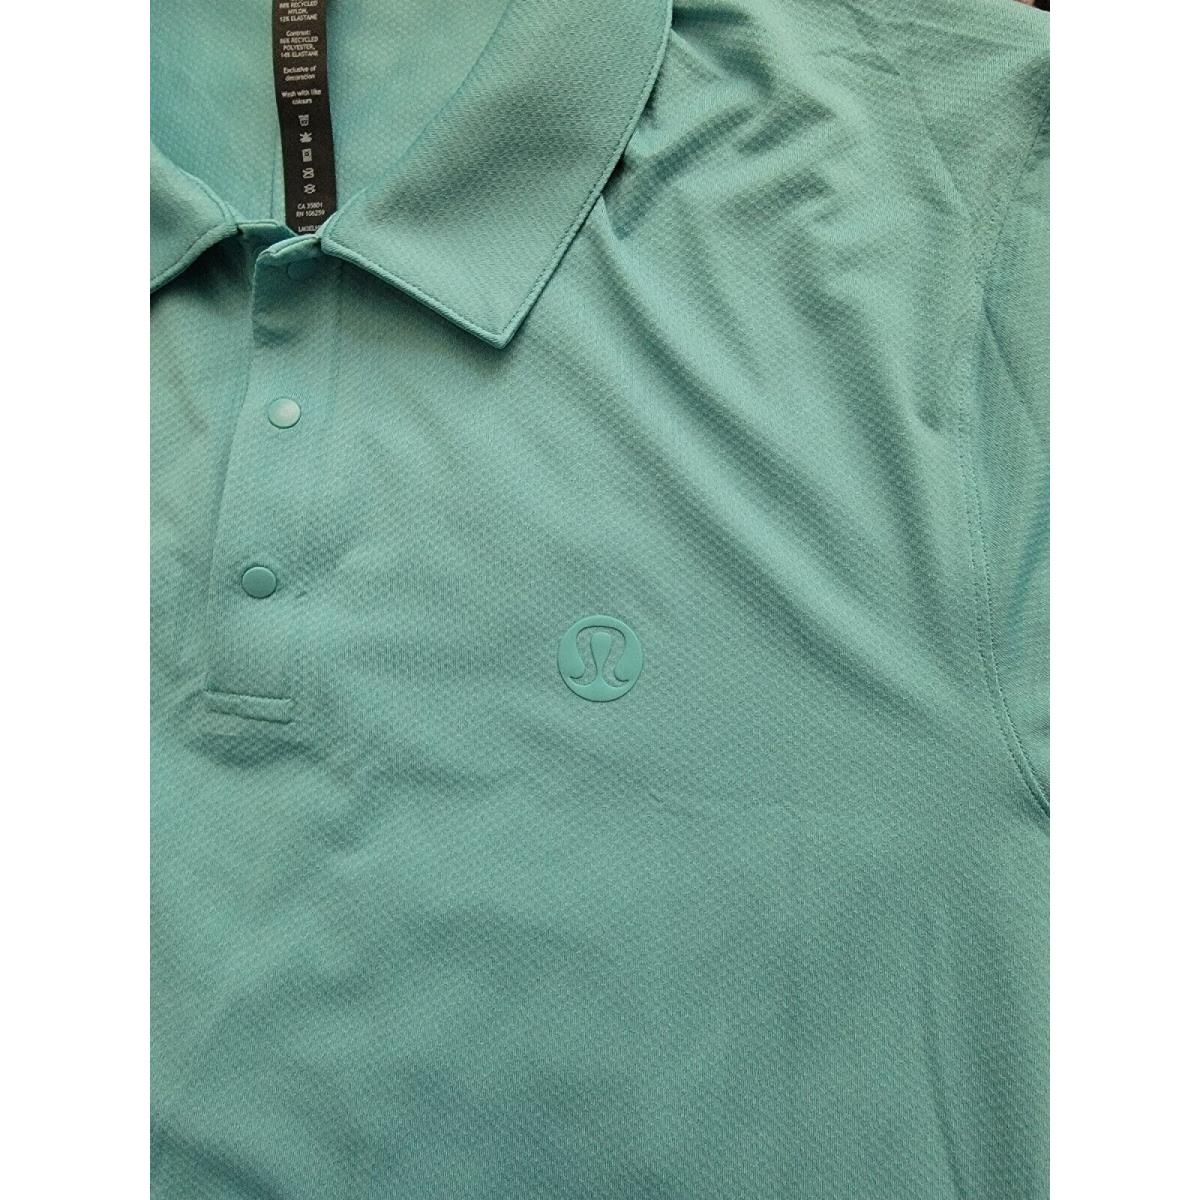 Mens Lululemon Stretch Golf Polo Short Sleeve Shirt 2XL Tdlt Teal Green